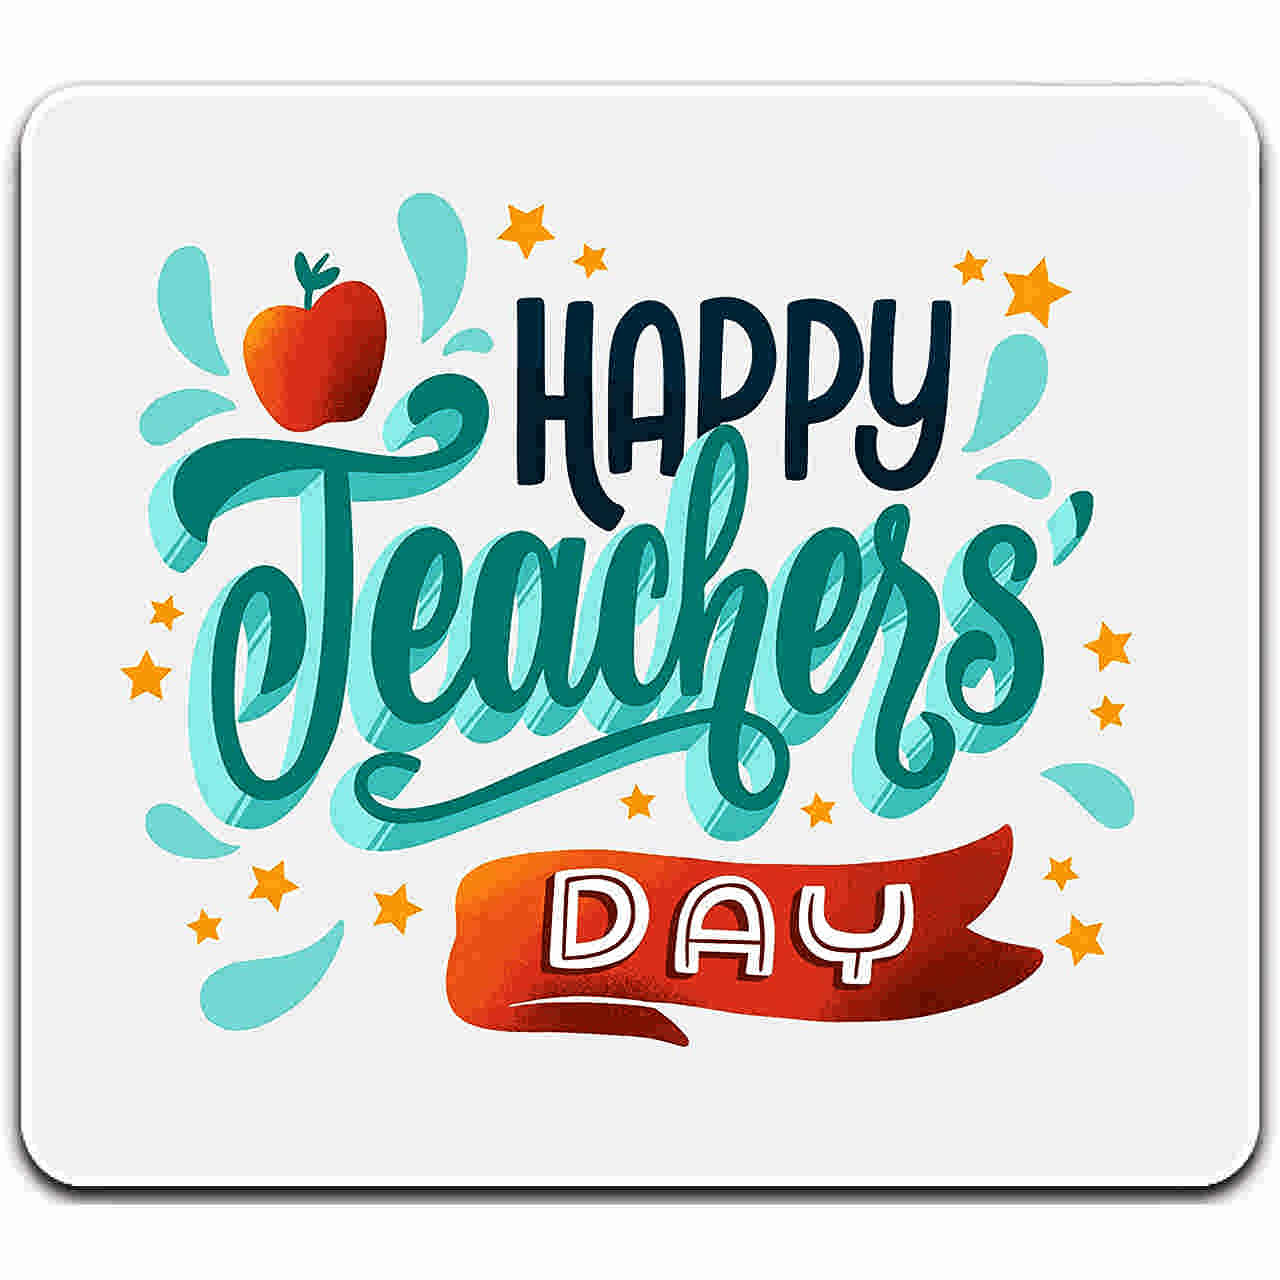 HAPPY TEACHERS DAY MOUSE PAD (Design 3)